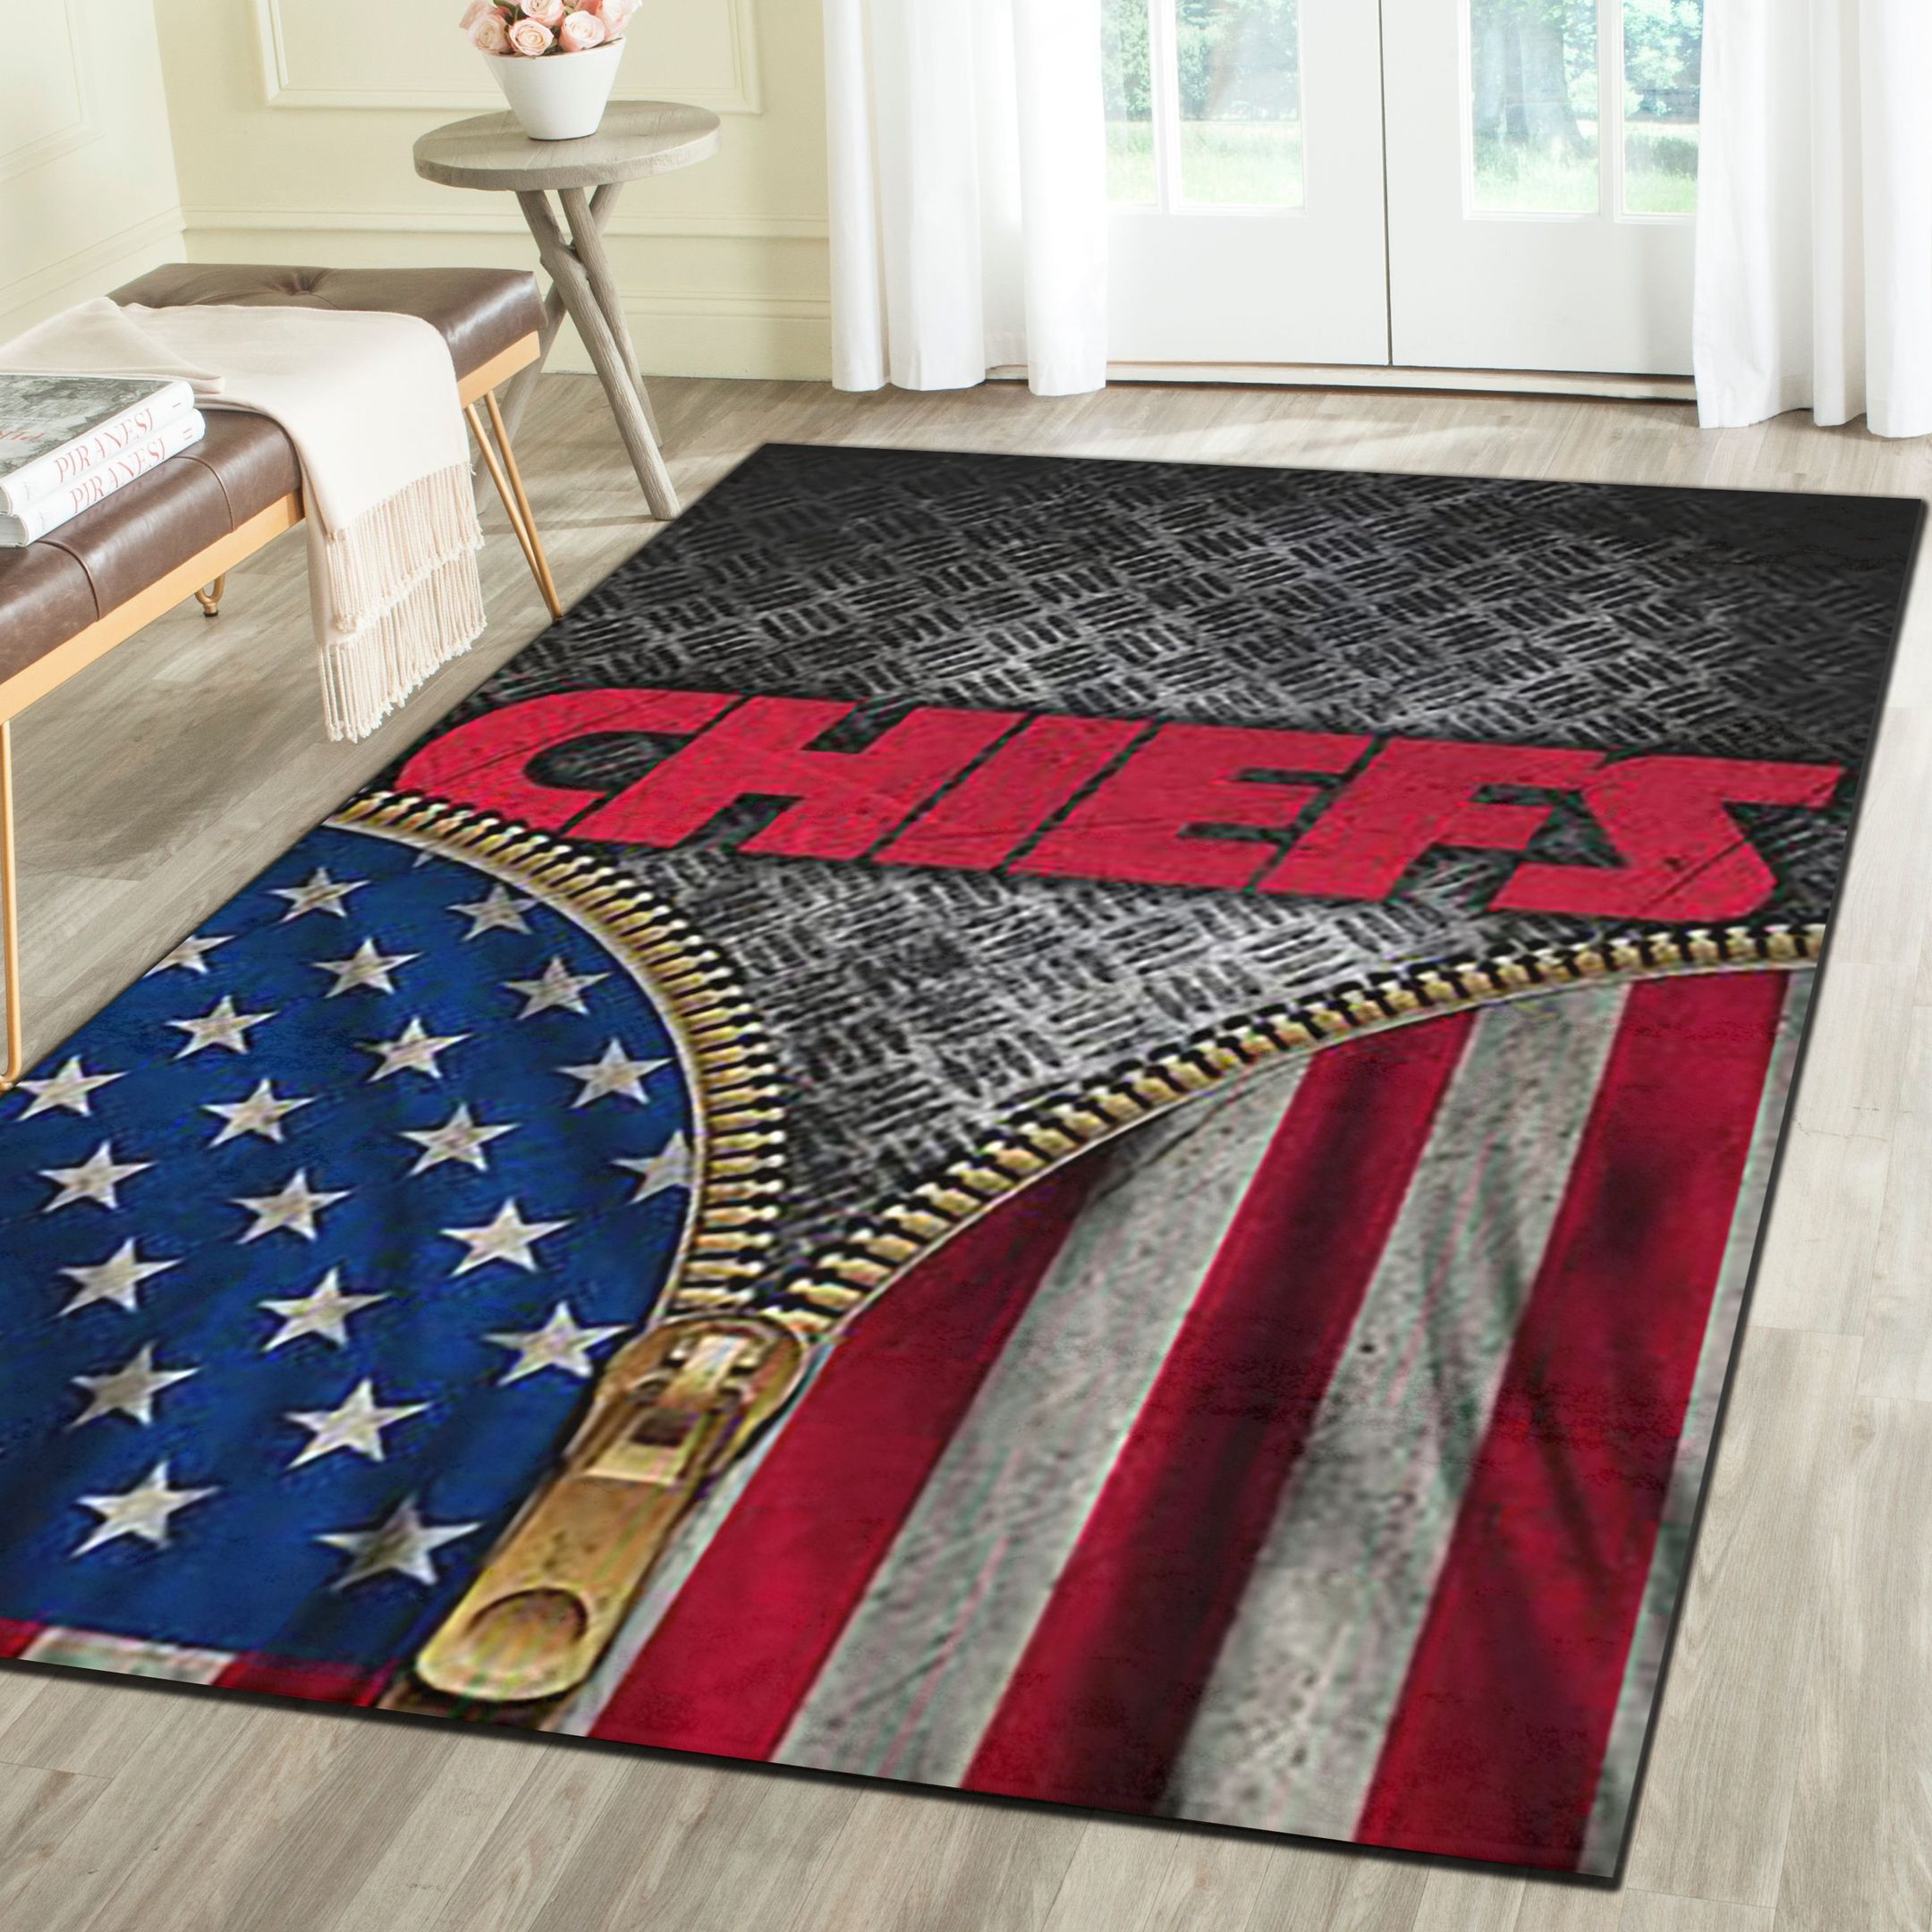 Kansas City Chiefs Area Rug, Football Team Living Room Bedroom Carpet, Sports Floor Mat Home Decor